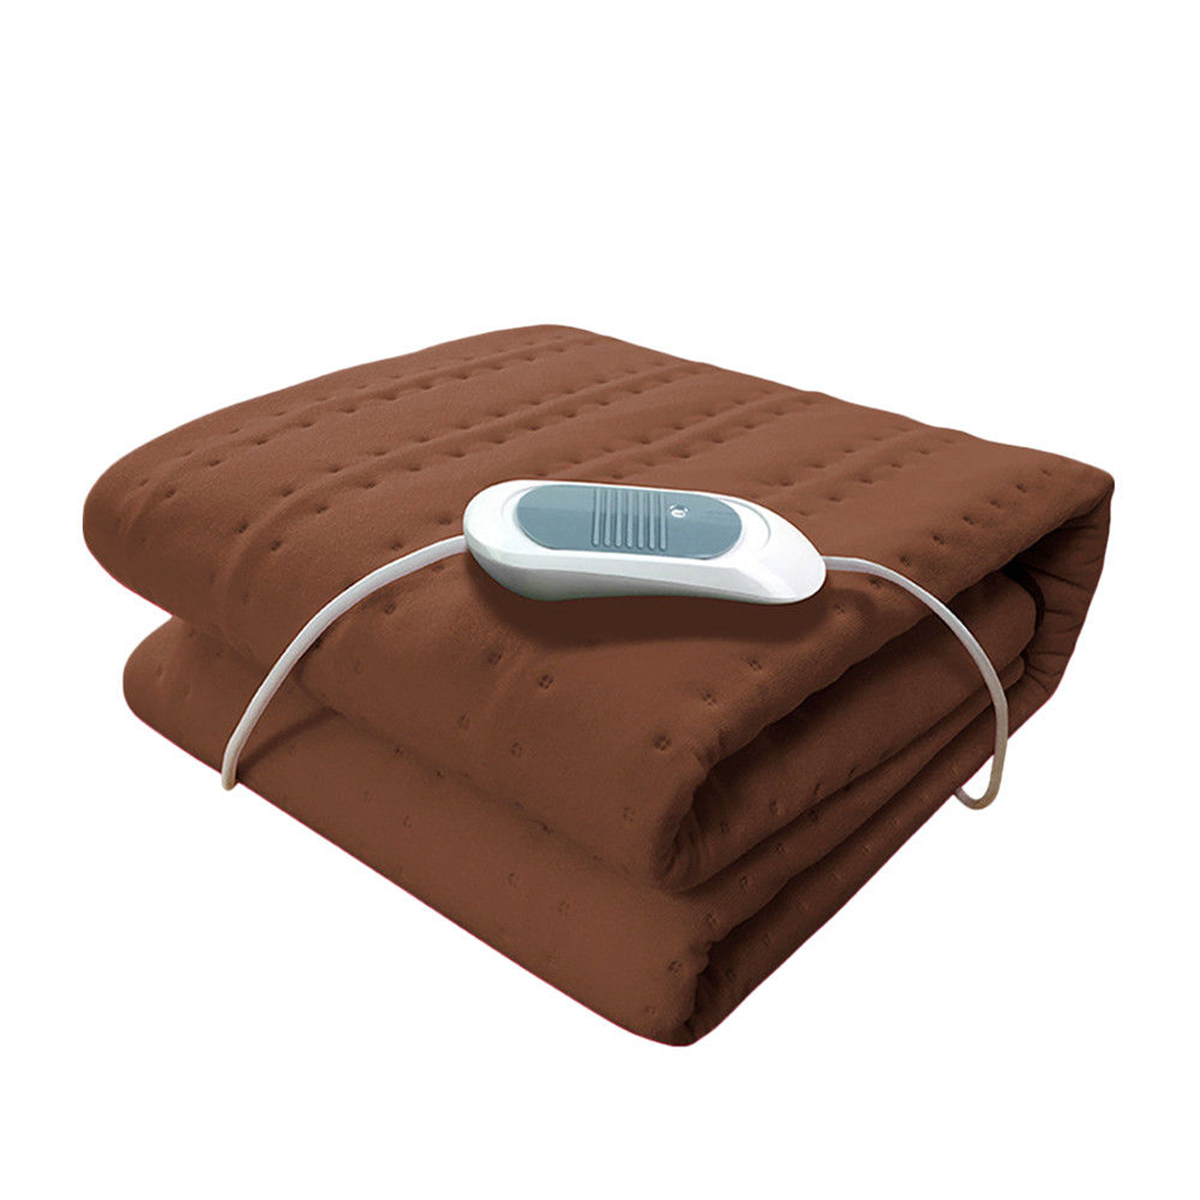 150X75-Electric-Heated-Throw-Over-Blankets-Fleece-Washable-Warm-Mattress-1377860